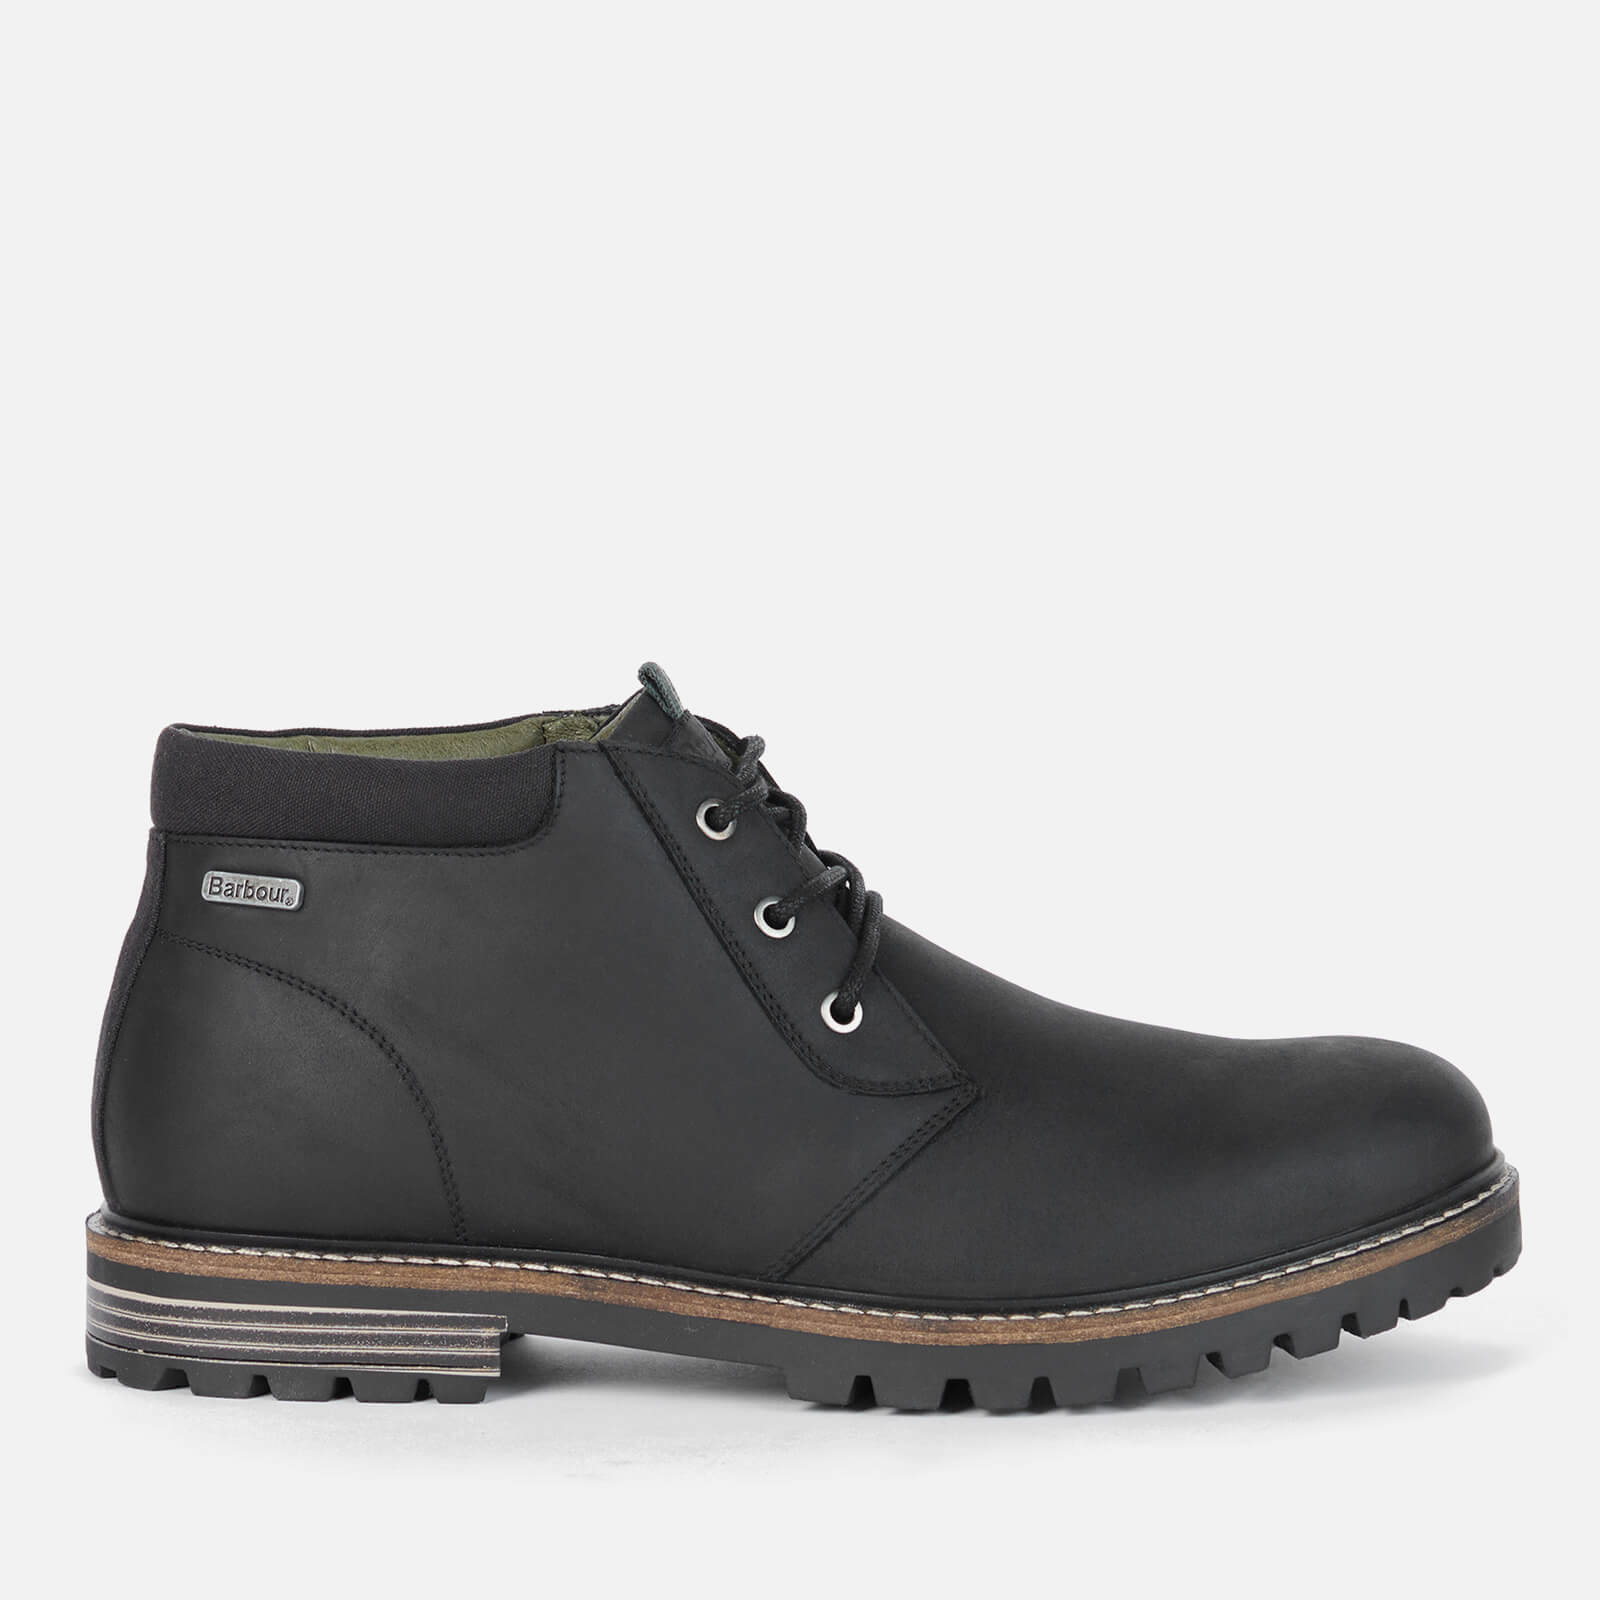 Barbour Men’s Boulder Leather Chukka Boots